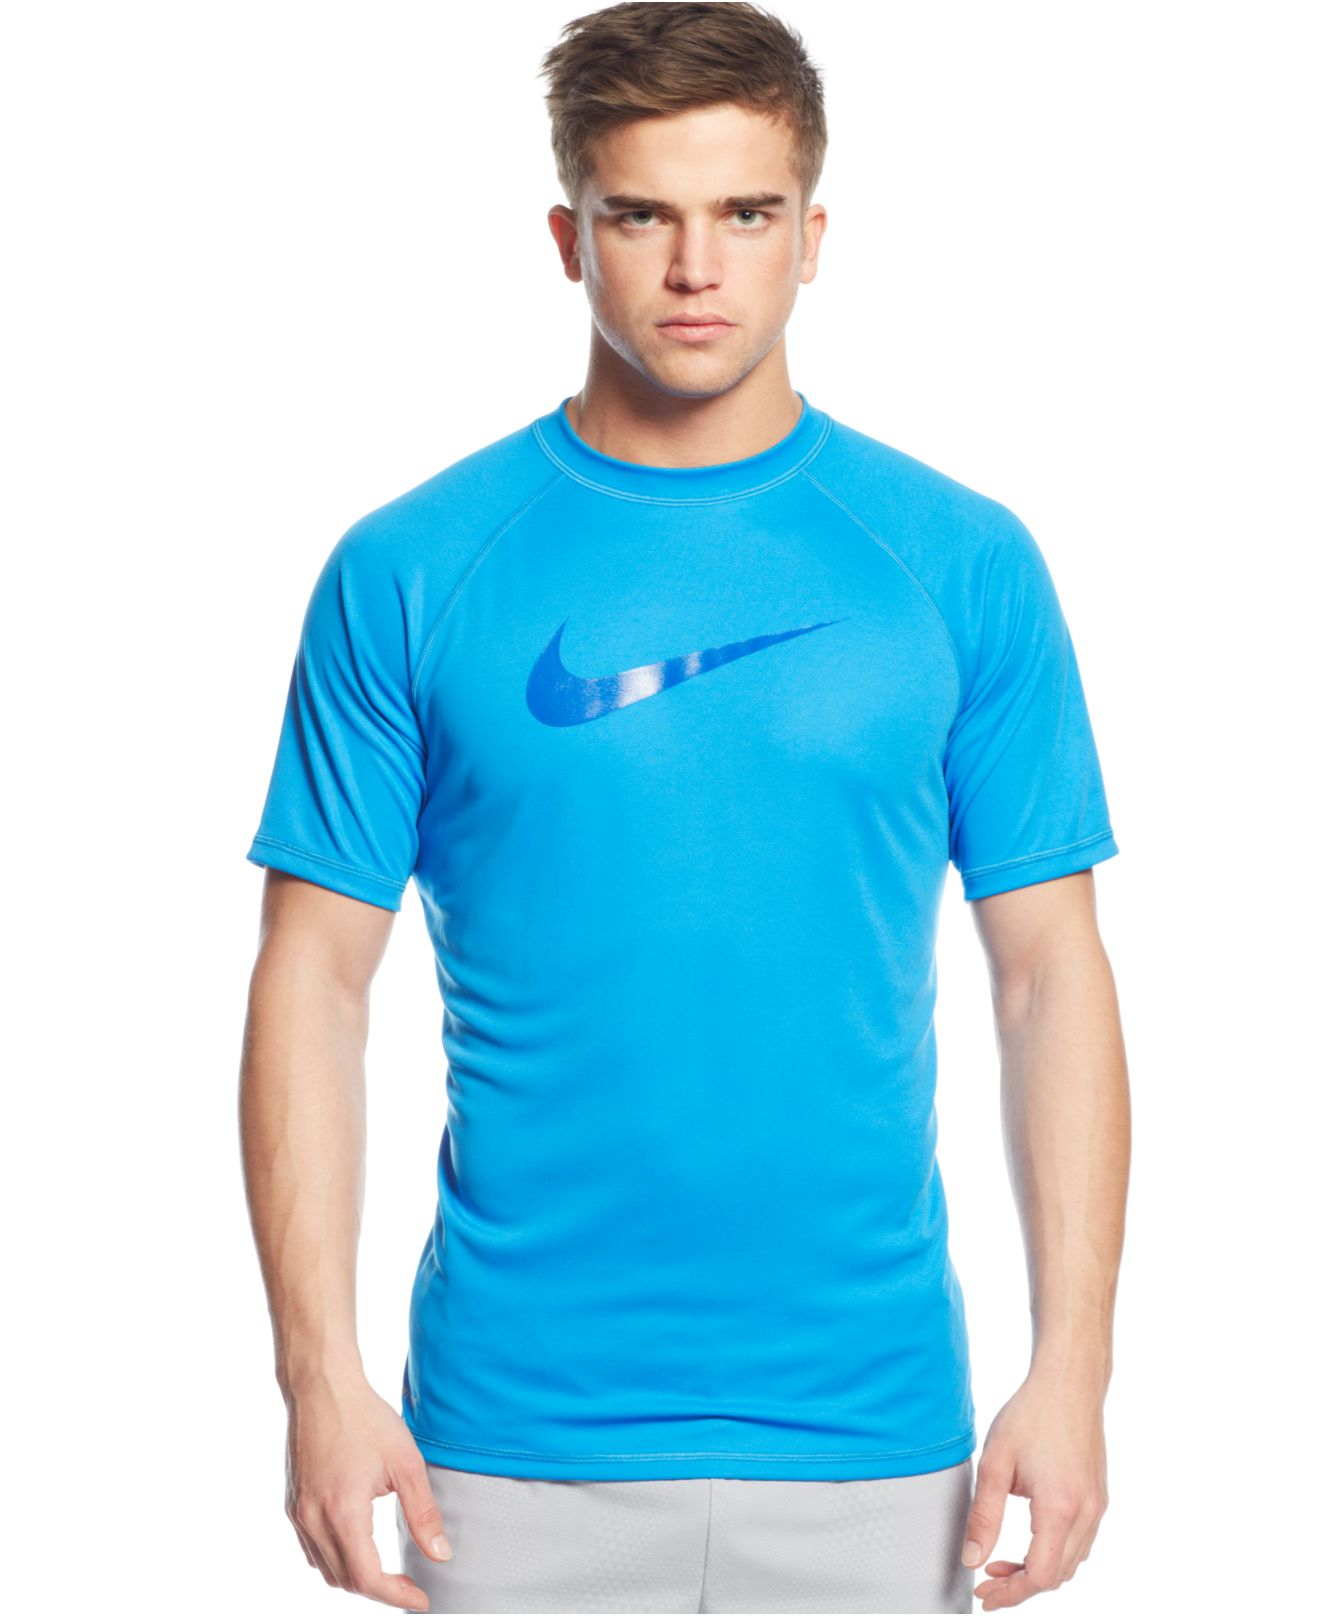 Lyst - Nike Hydro Dri-fit Gloss Swoosh Rashguard in Blue for Men